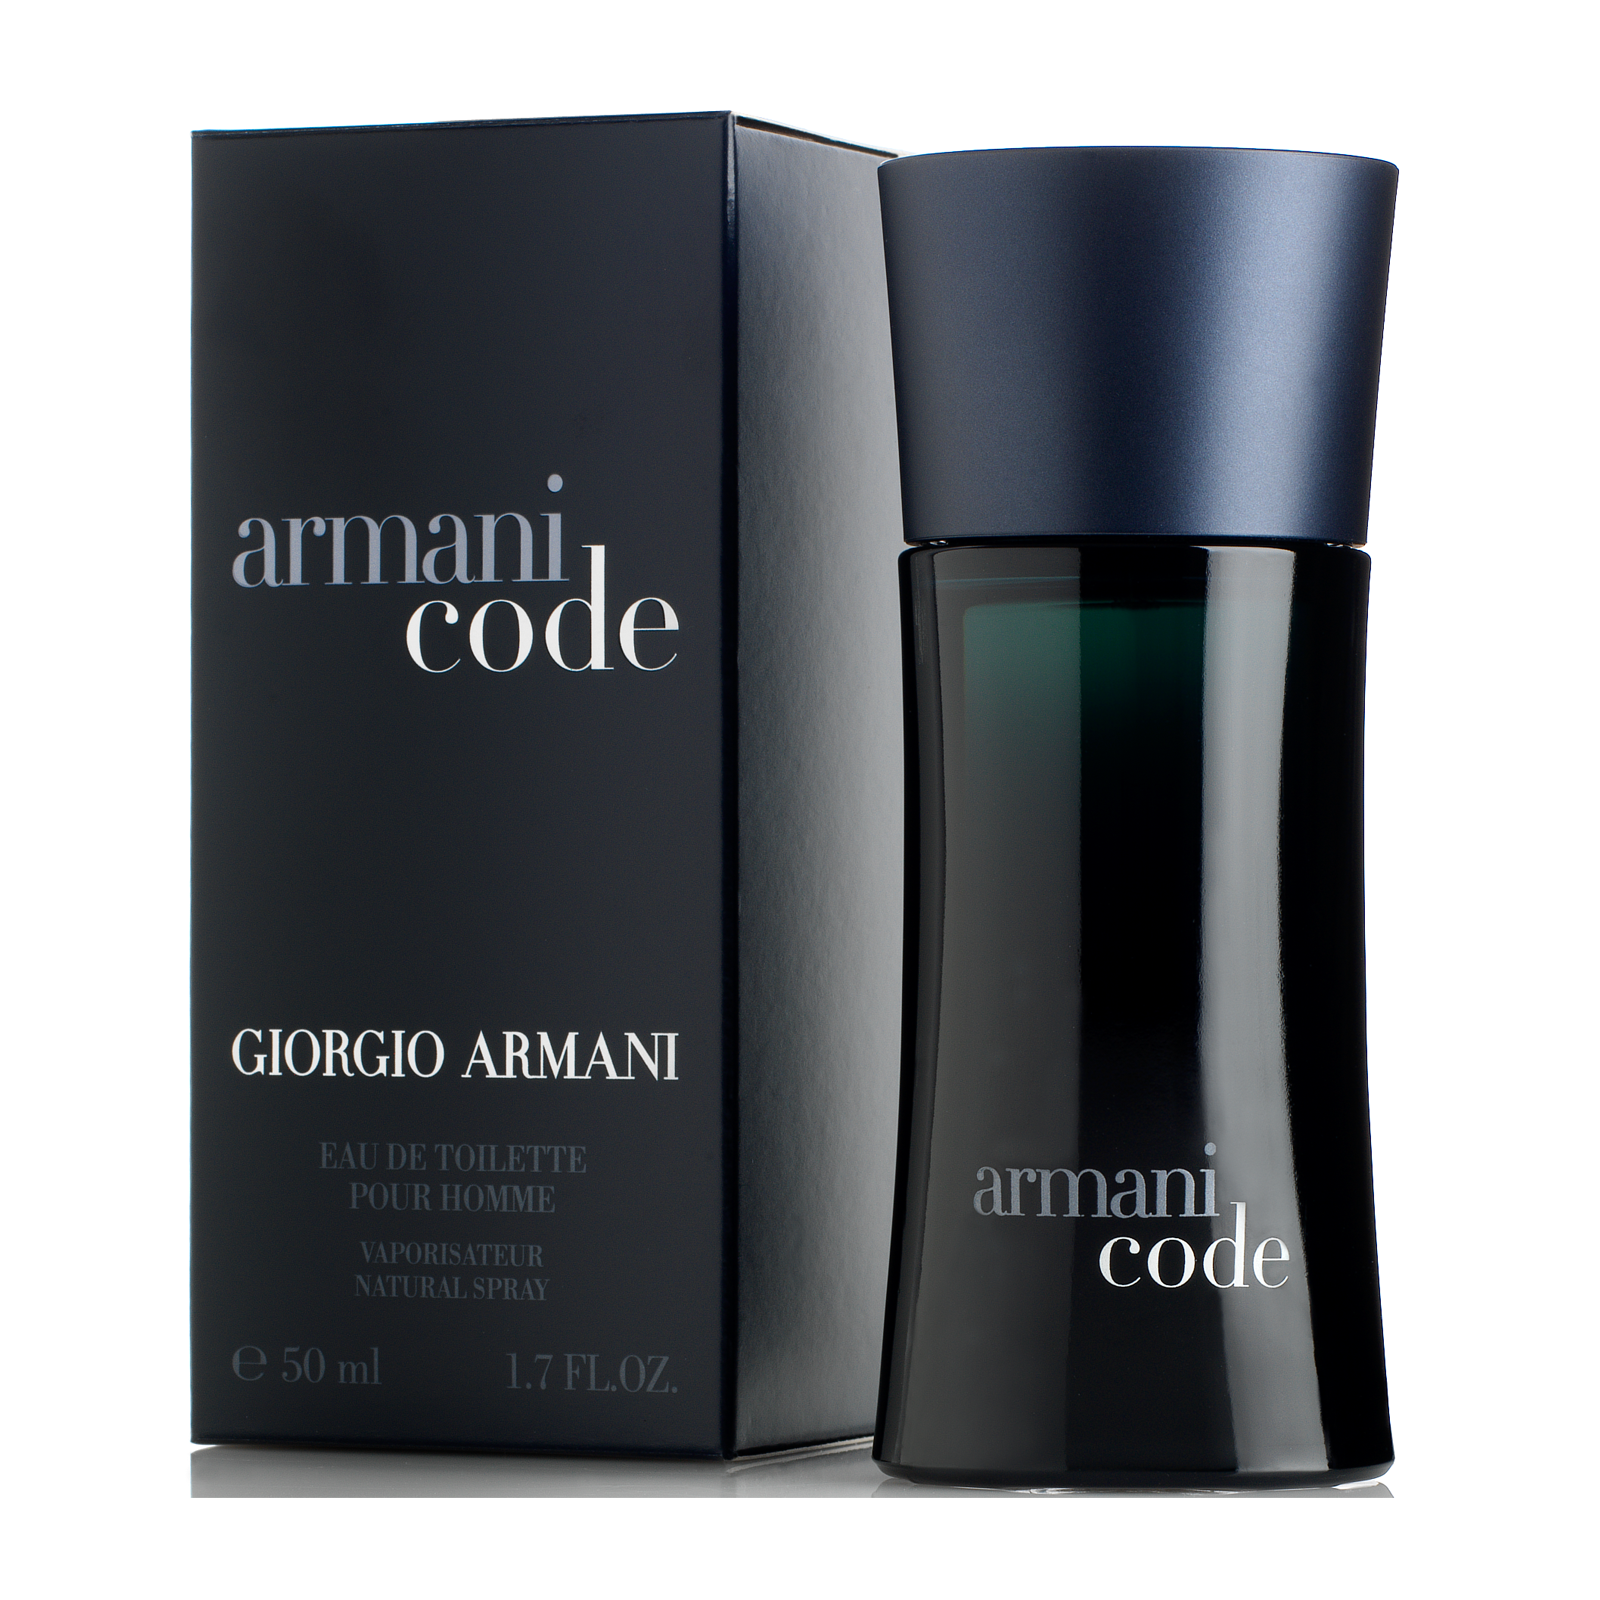 Code pour homme. Armani code мужской 50 мл. Giorgio Armani Armani code. Туалетная вода Giorgio Armani code. Giorgio Armani code Sport men EDT 30ml.